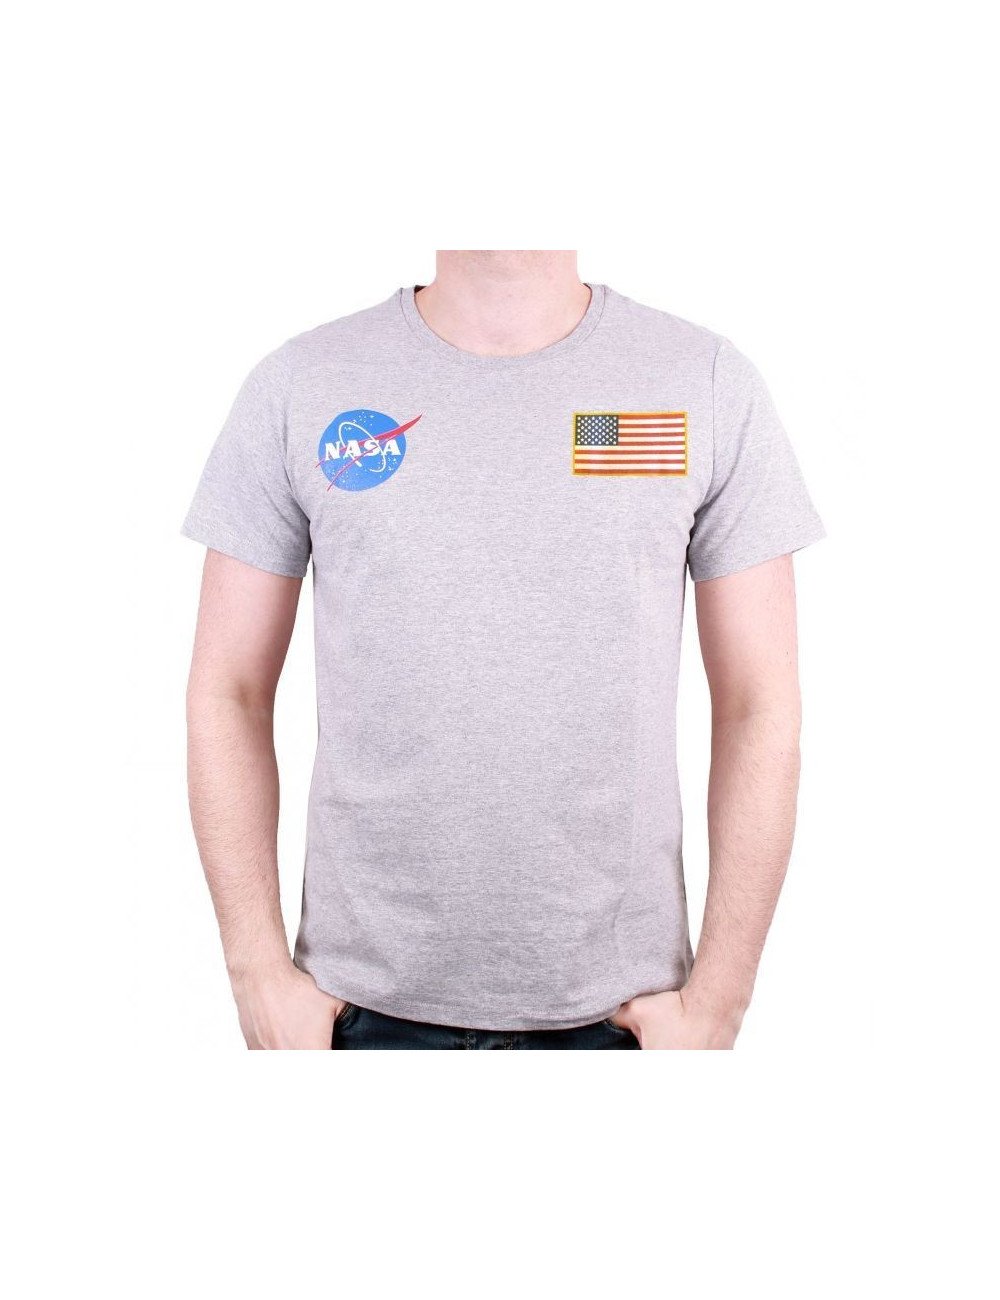 T-Shirt NASA - Gris - logo drapeau - S